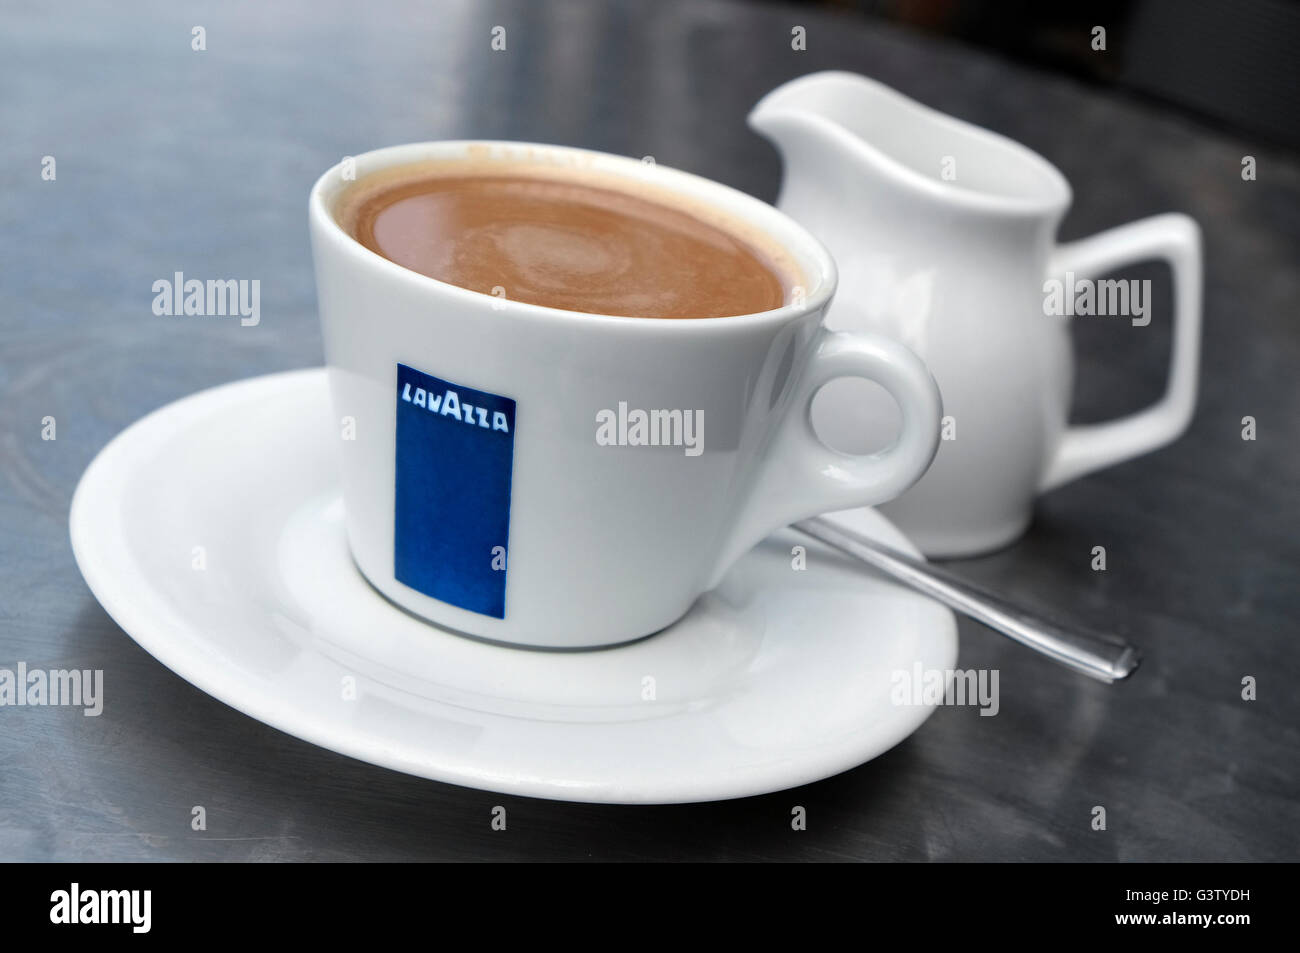 Tasse de café de marque lavazza Photo Stock - Alamy